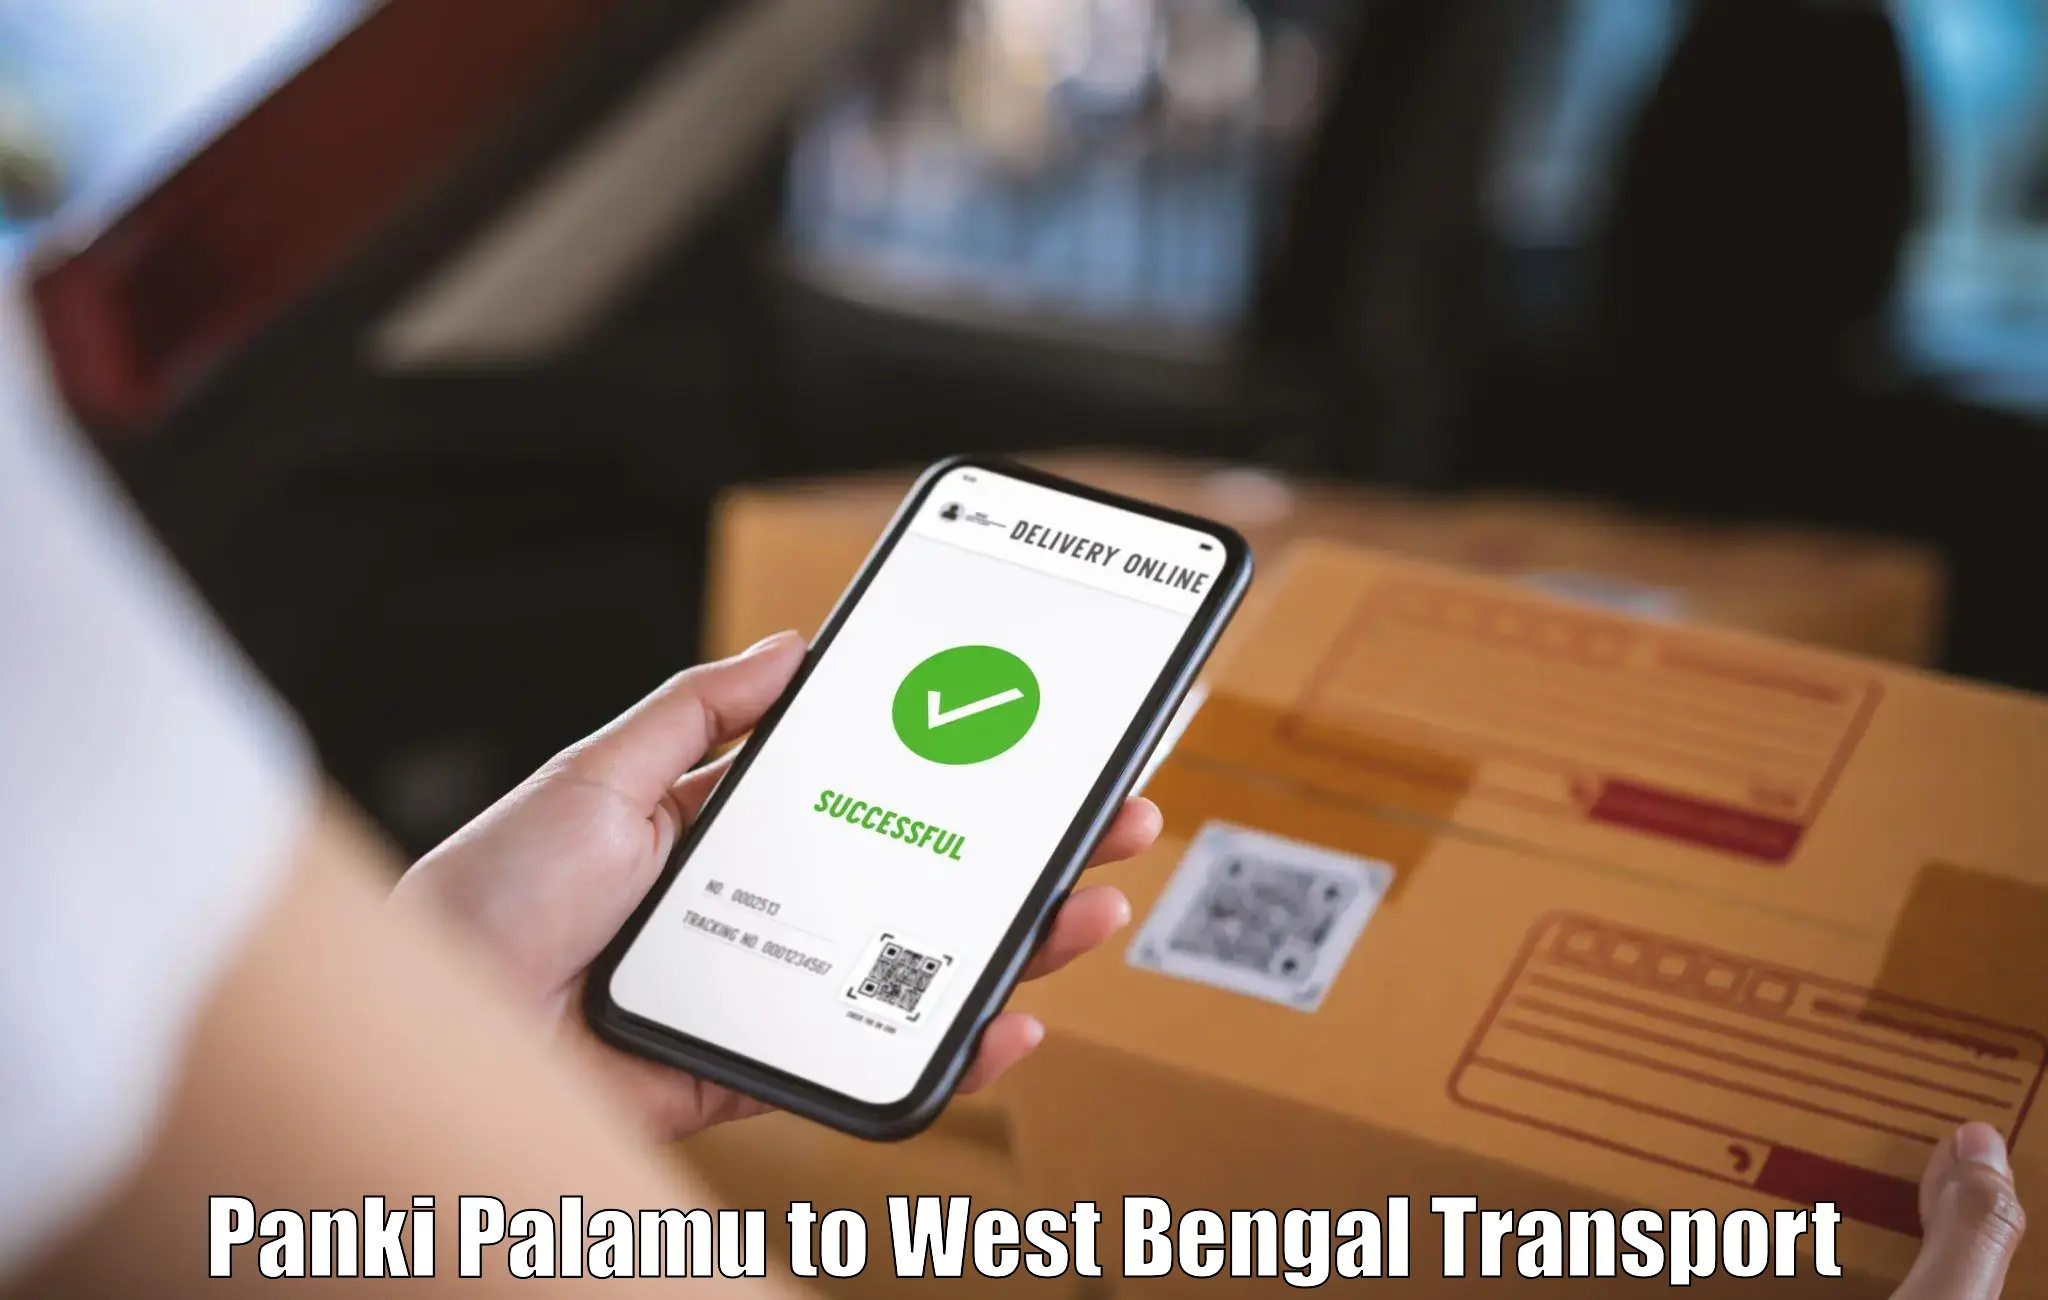 Transport in sharing Panki Palamu to Mohammad Bazar